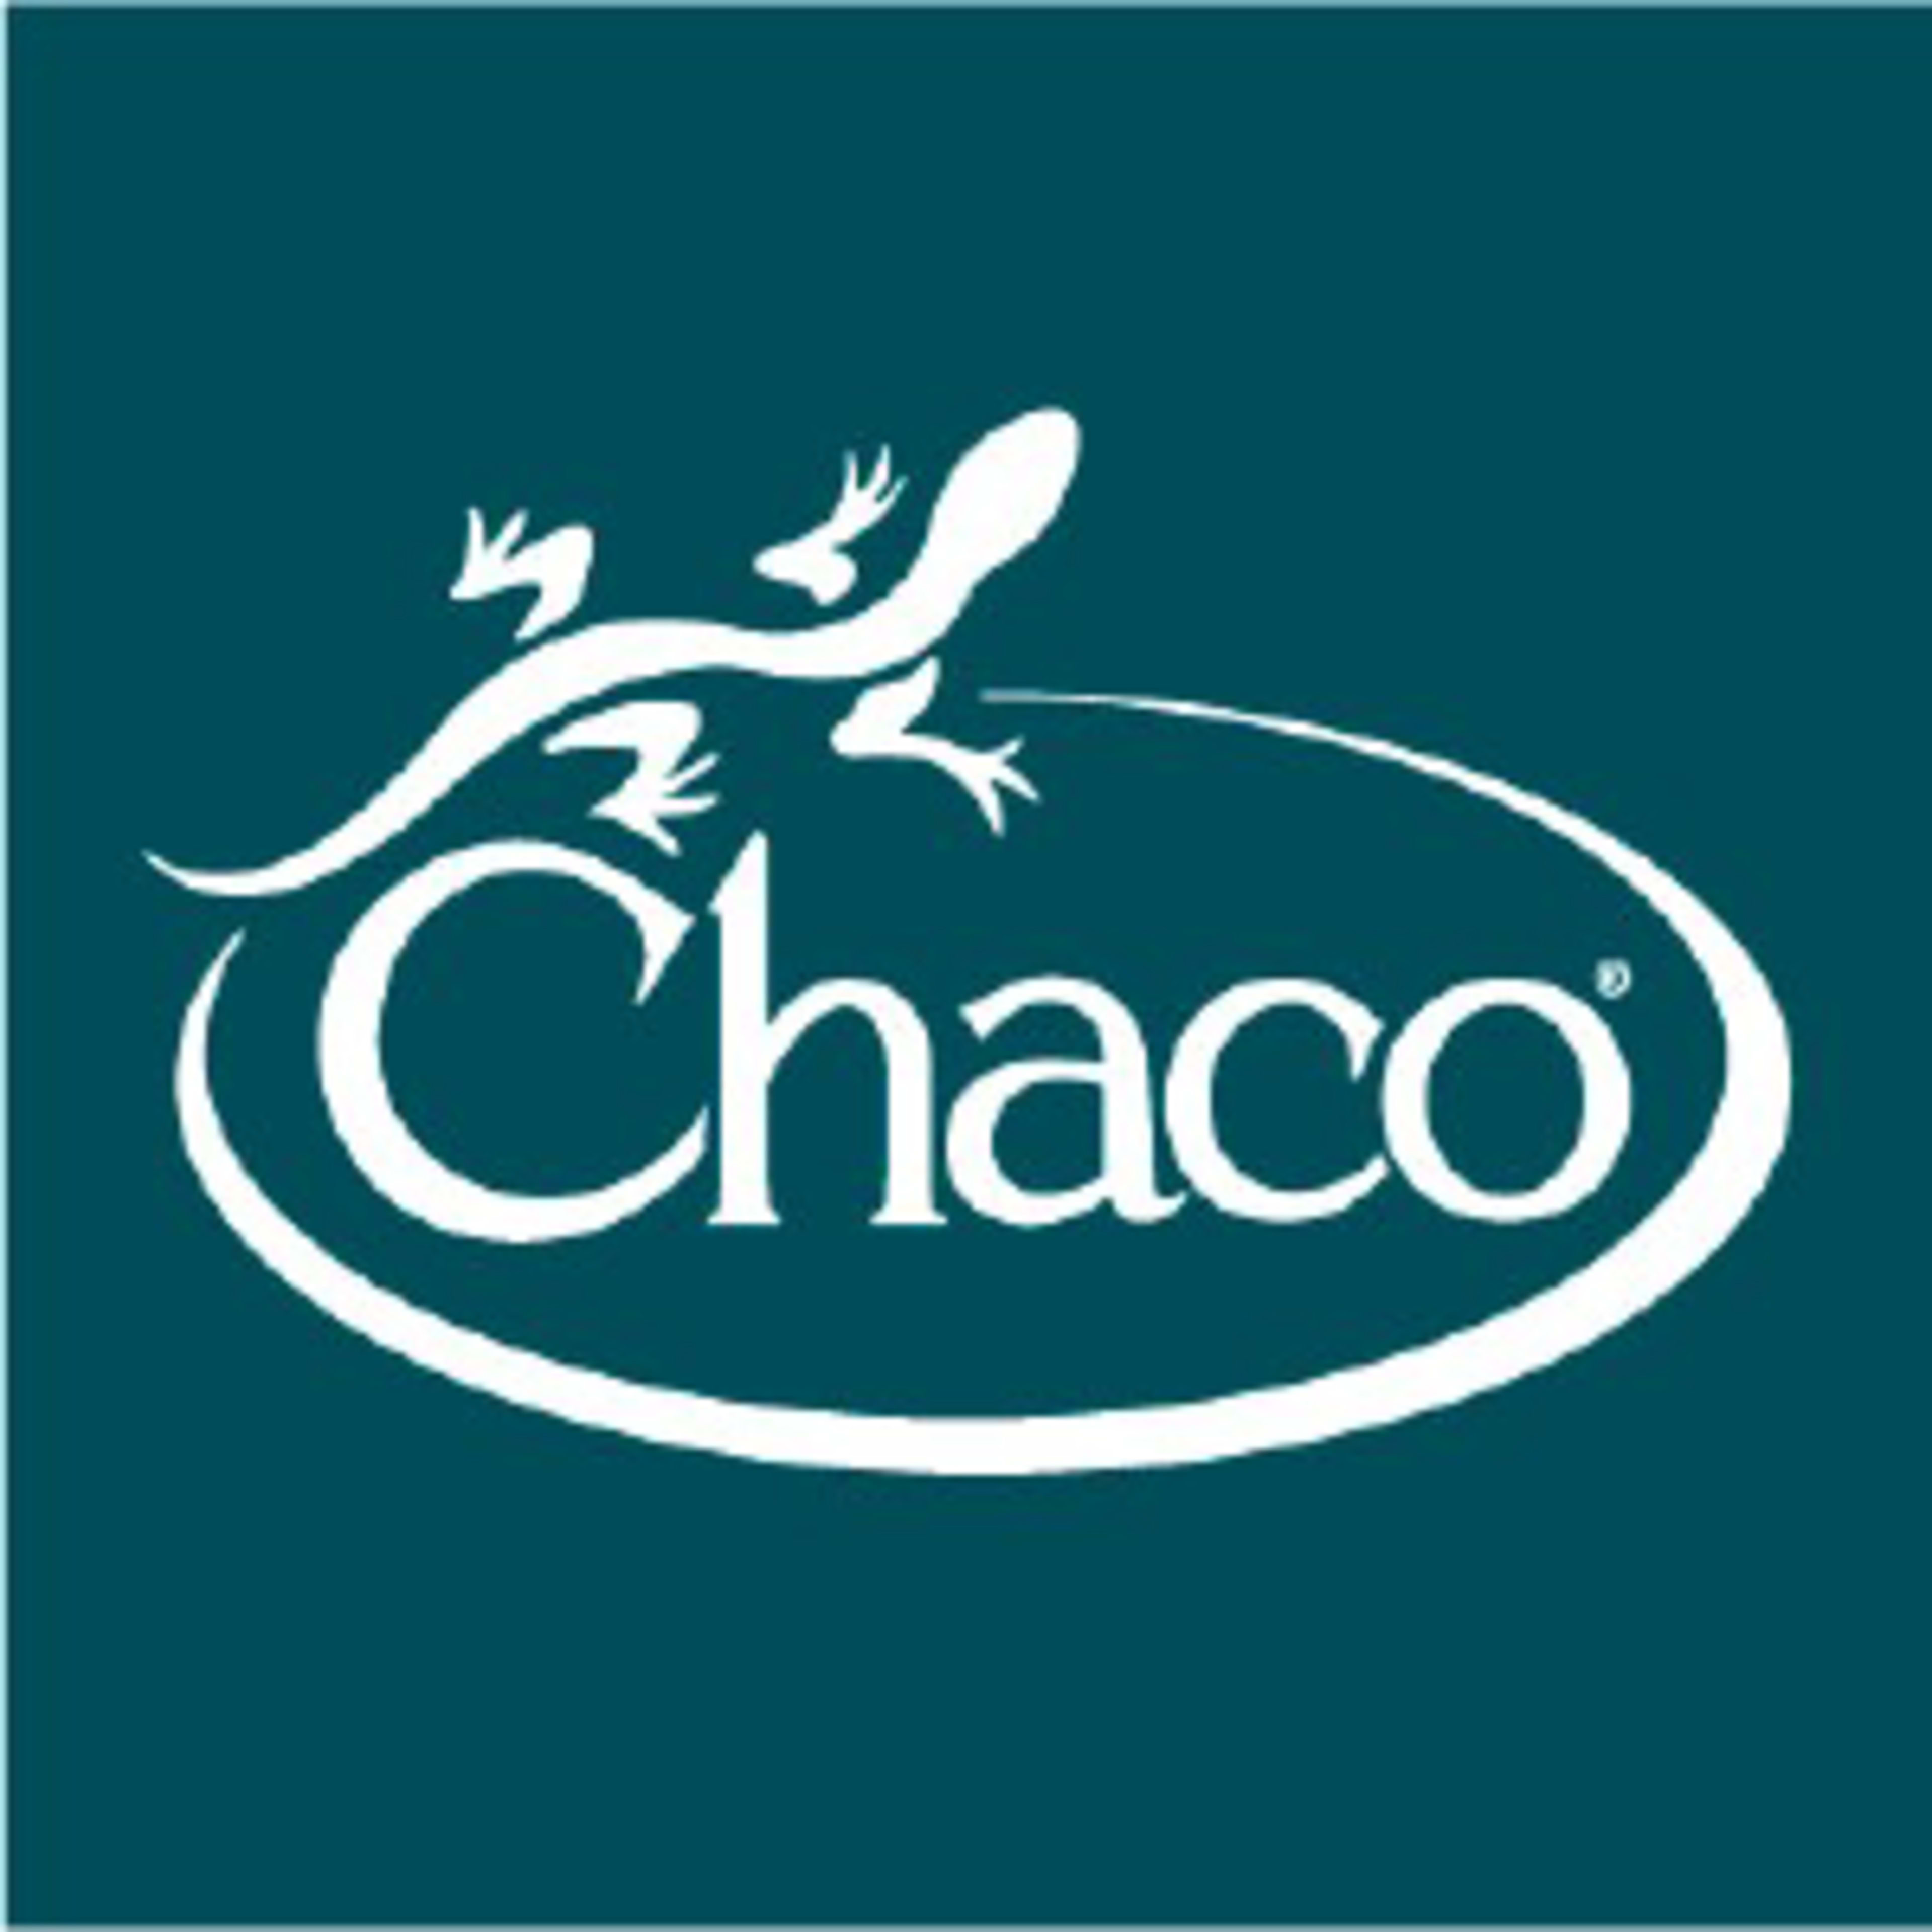 ChacoCode